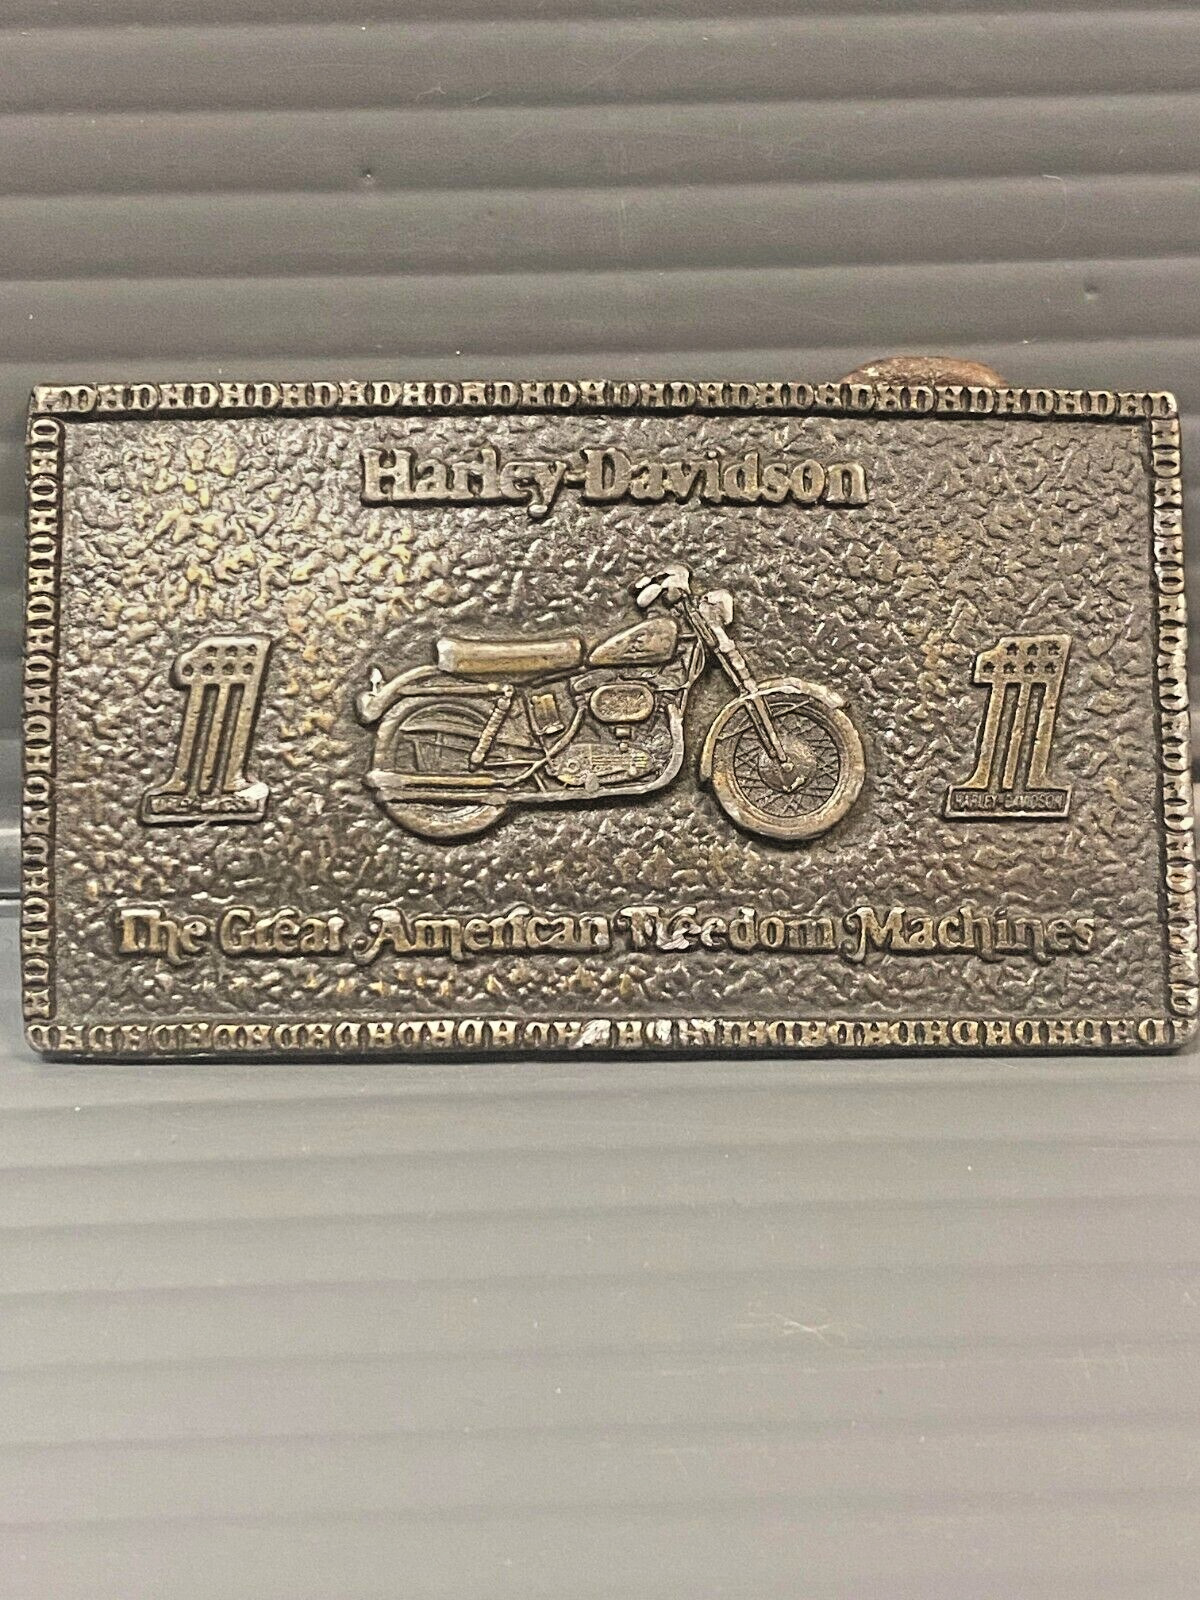 Vintage Brass Belt Buckle 1974 Harley-Davidson Motor Cycle American Freedom